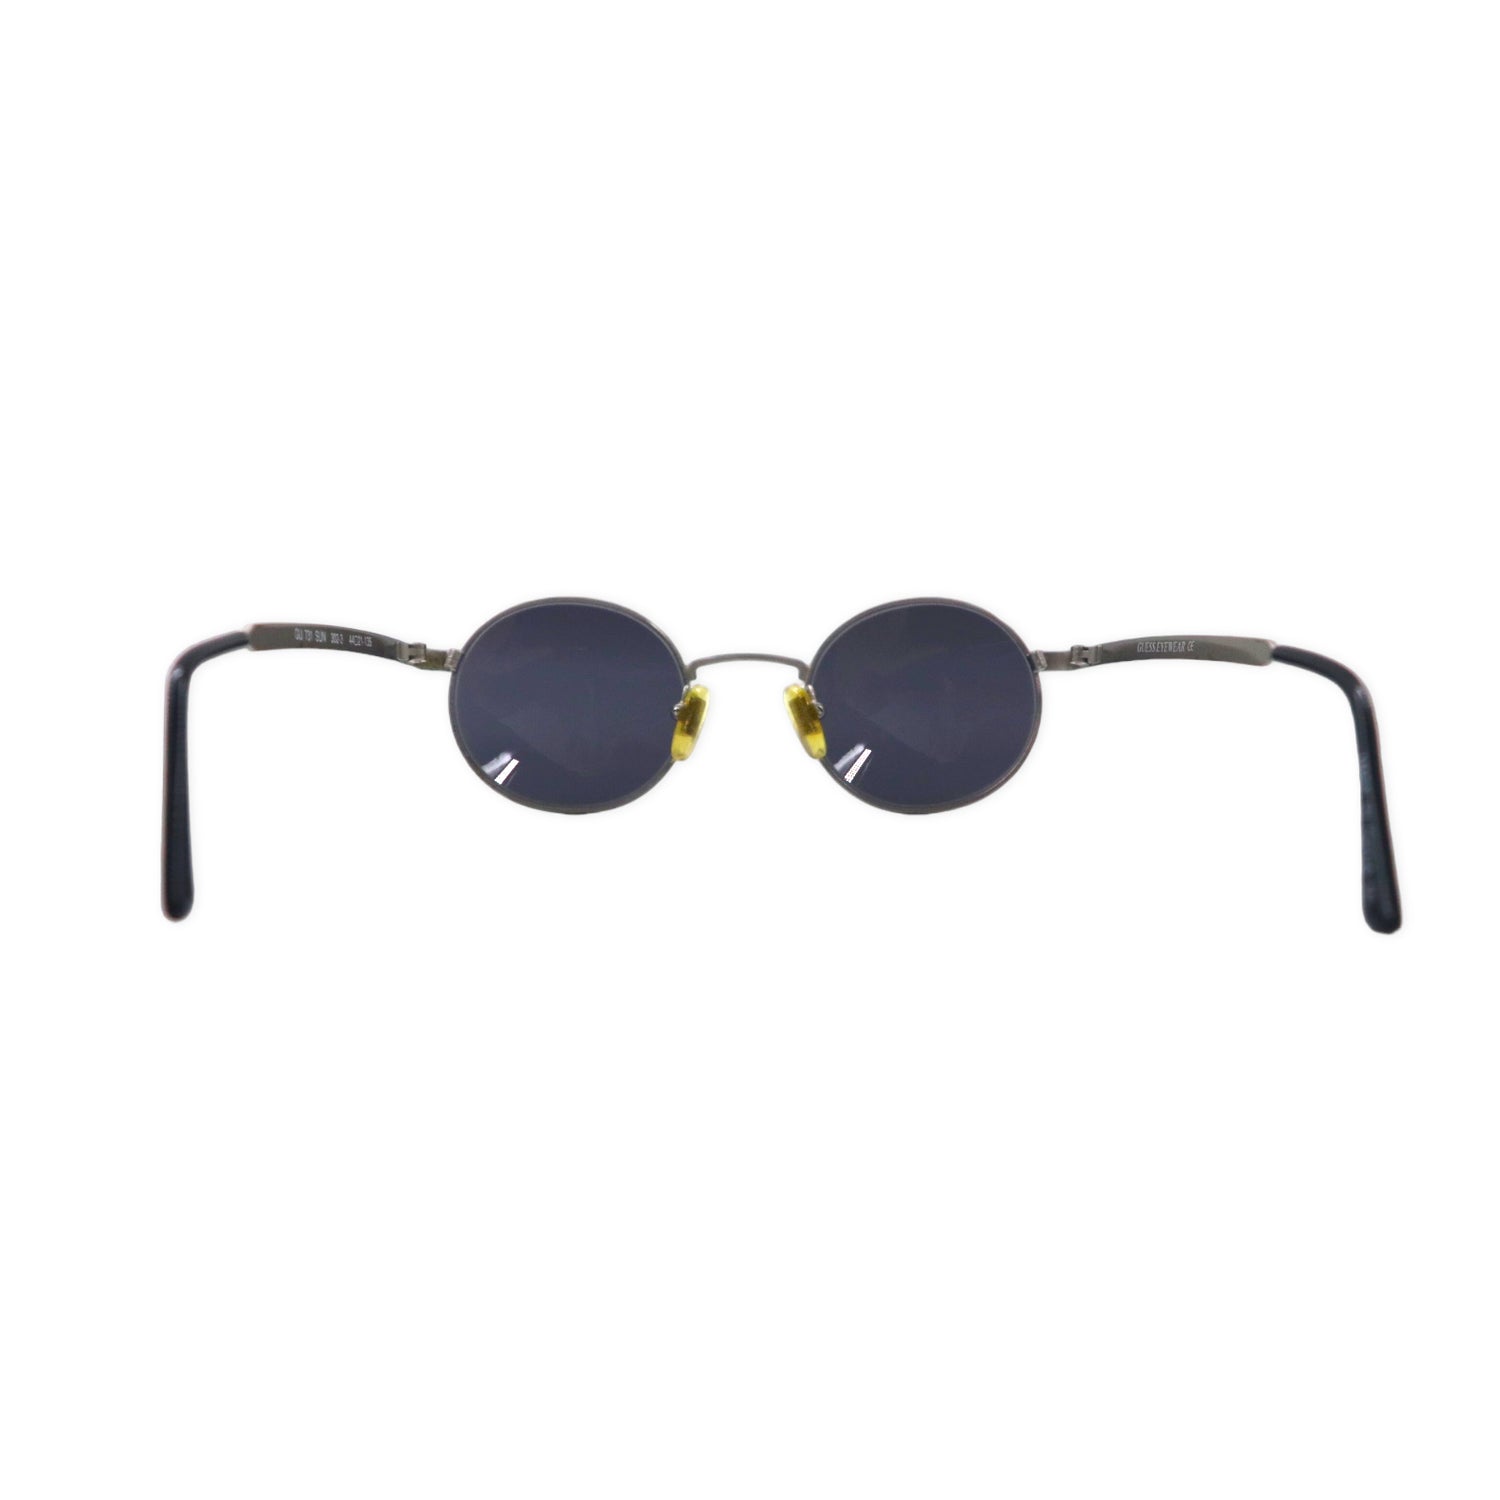 GUESS Metal Frame Sunglasses Round Silver GU 731 Sun 302-3 44